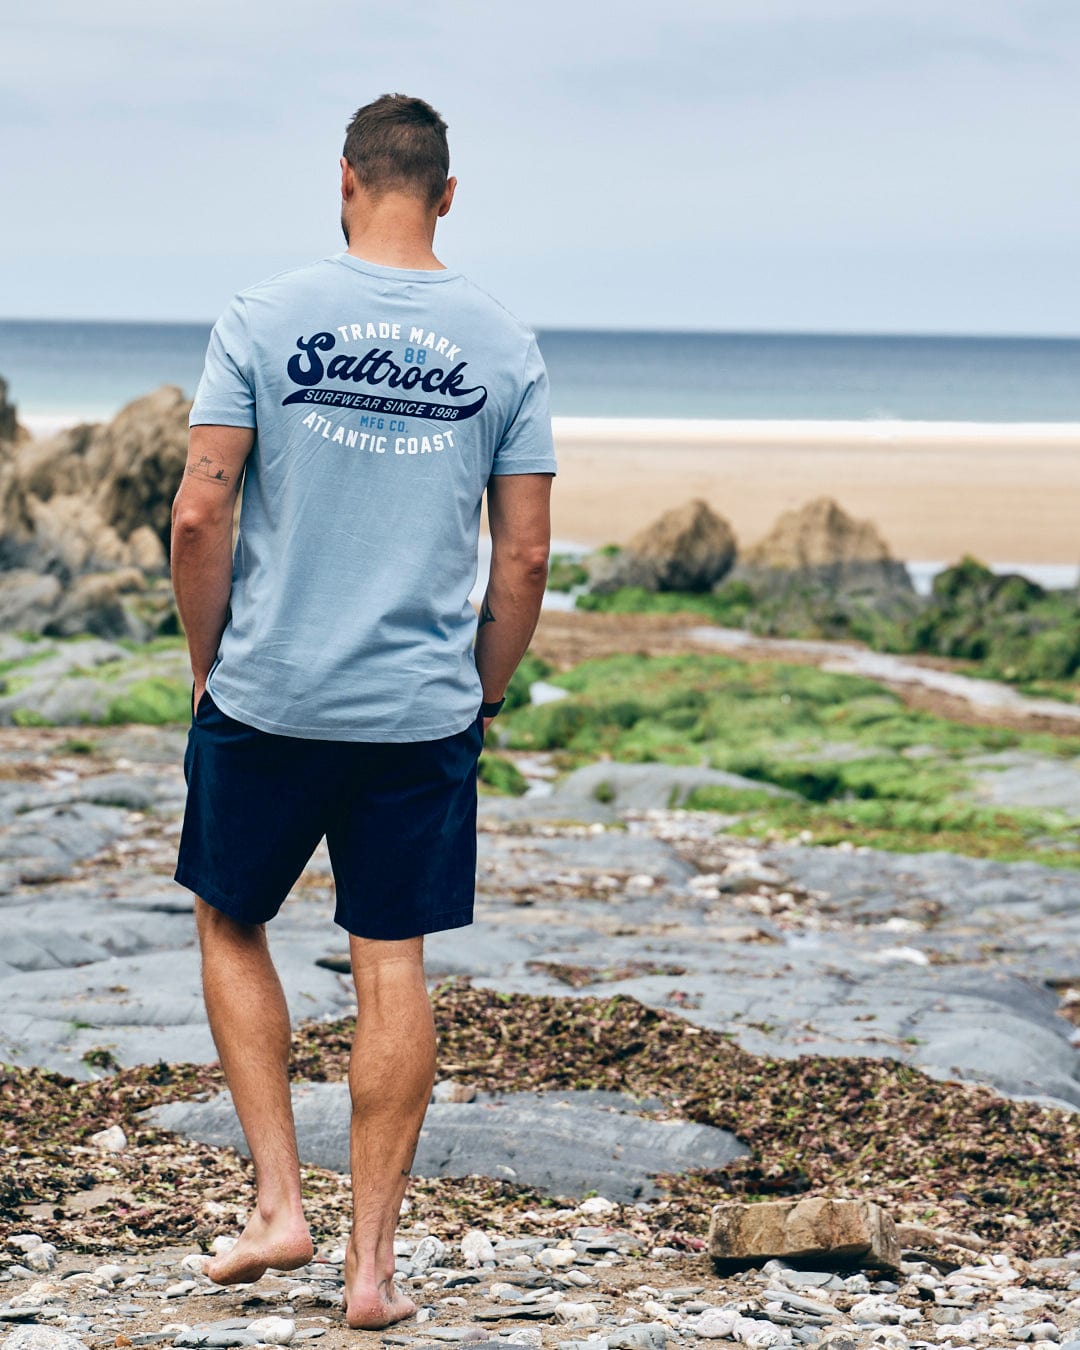 A man wearing a light blue, 100% cotton t-shirt and dark shorts stands on a rocky beach facing the ocean. The back of his Saltrock Home Run - Mens T-Shirt - Blue reads "Saltrock Atlantic Coast.